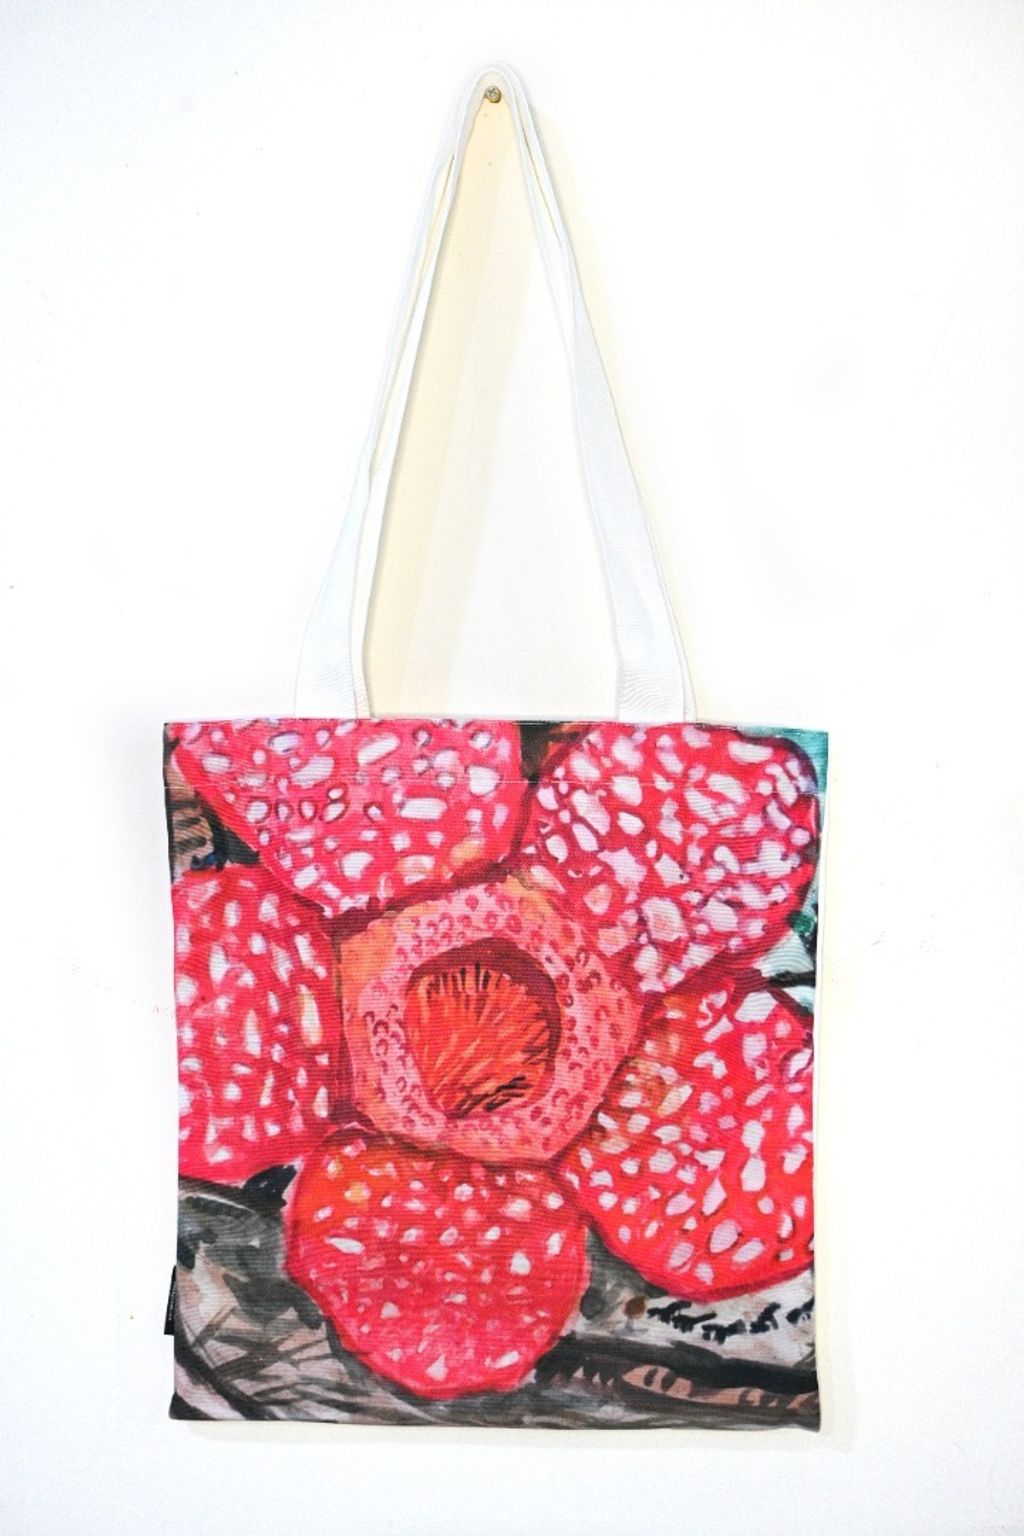 Recycle Bag Rafflesia.jpg